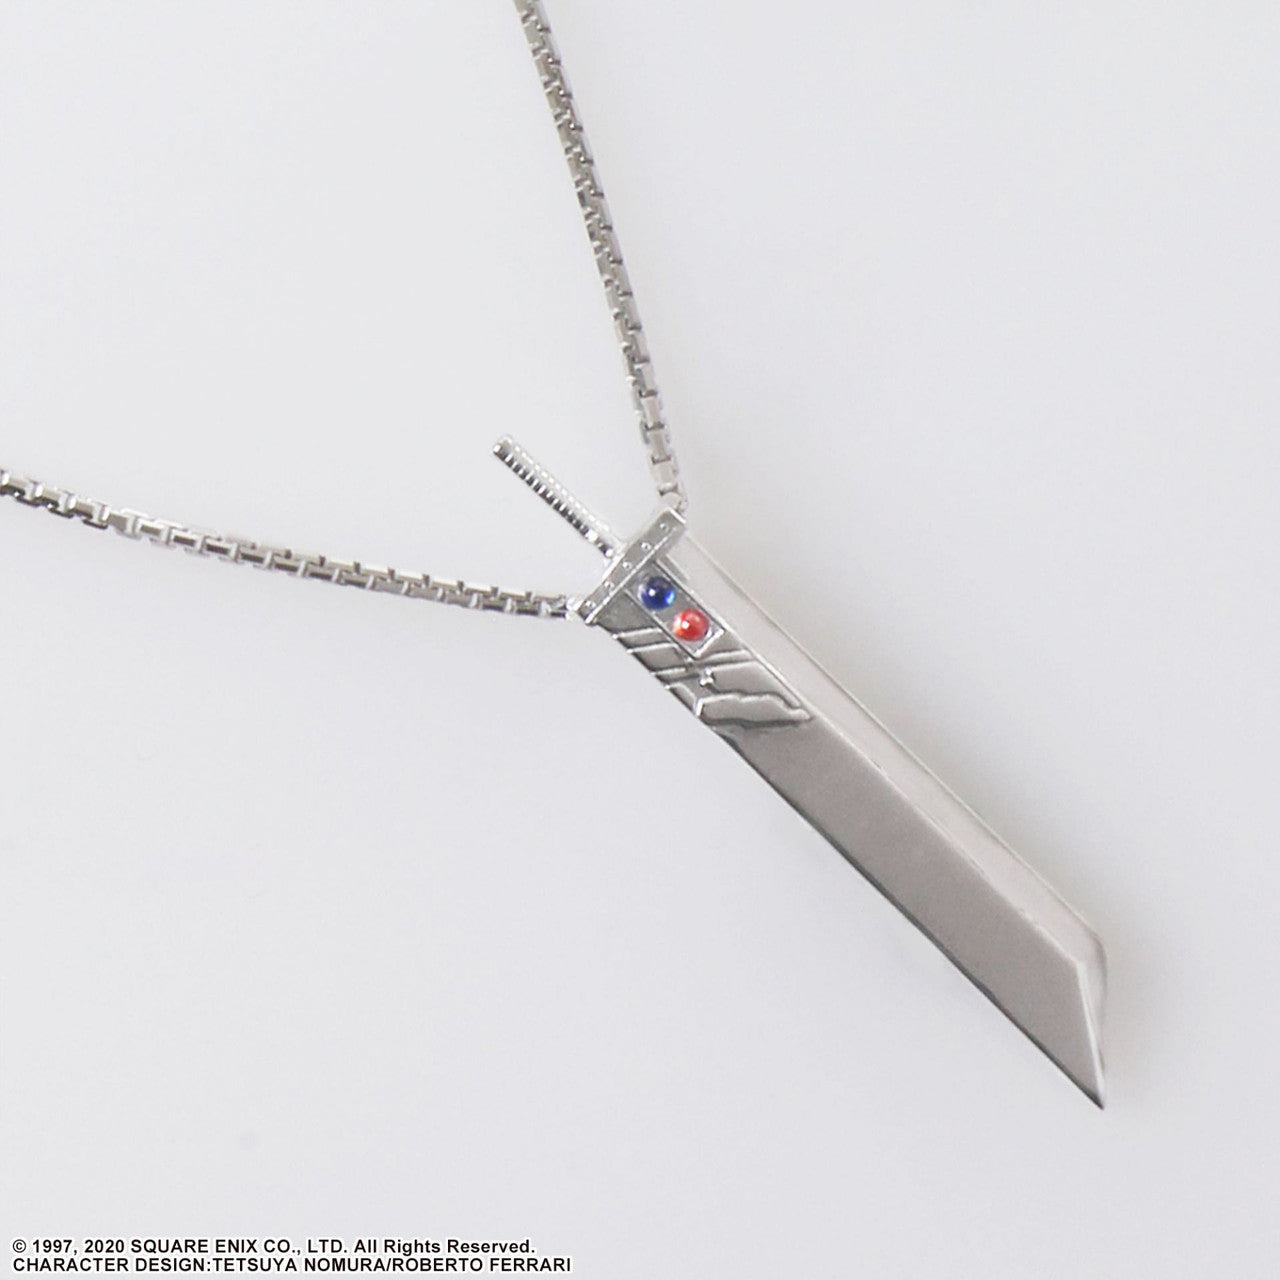 Final Fantasy VII Remake Silver Necklace - Buster Sword Limited Ver. (Reissue)